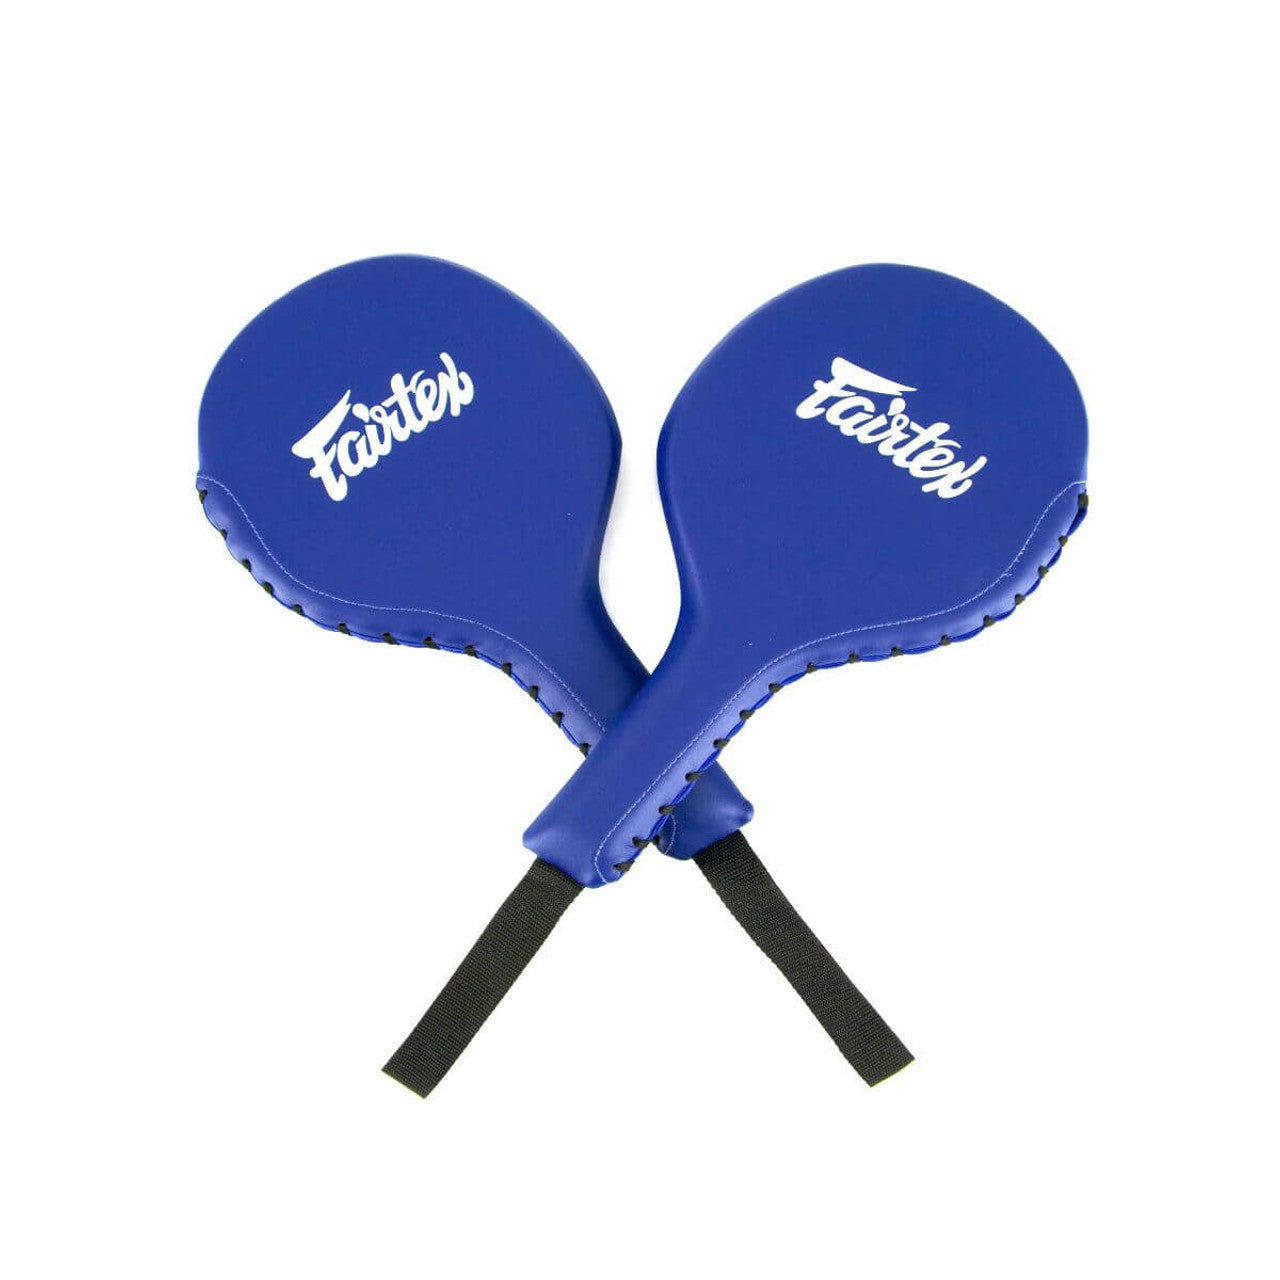 Buy online Fairtex Boxing Paddles | Fairtex, Booster, Blegend, Top 